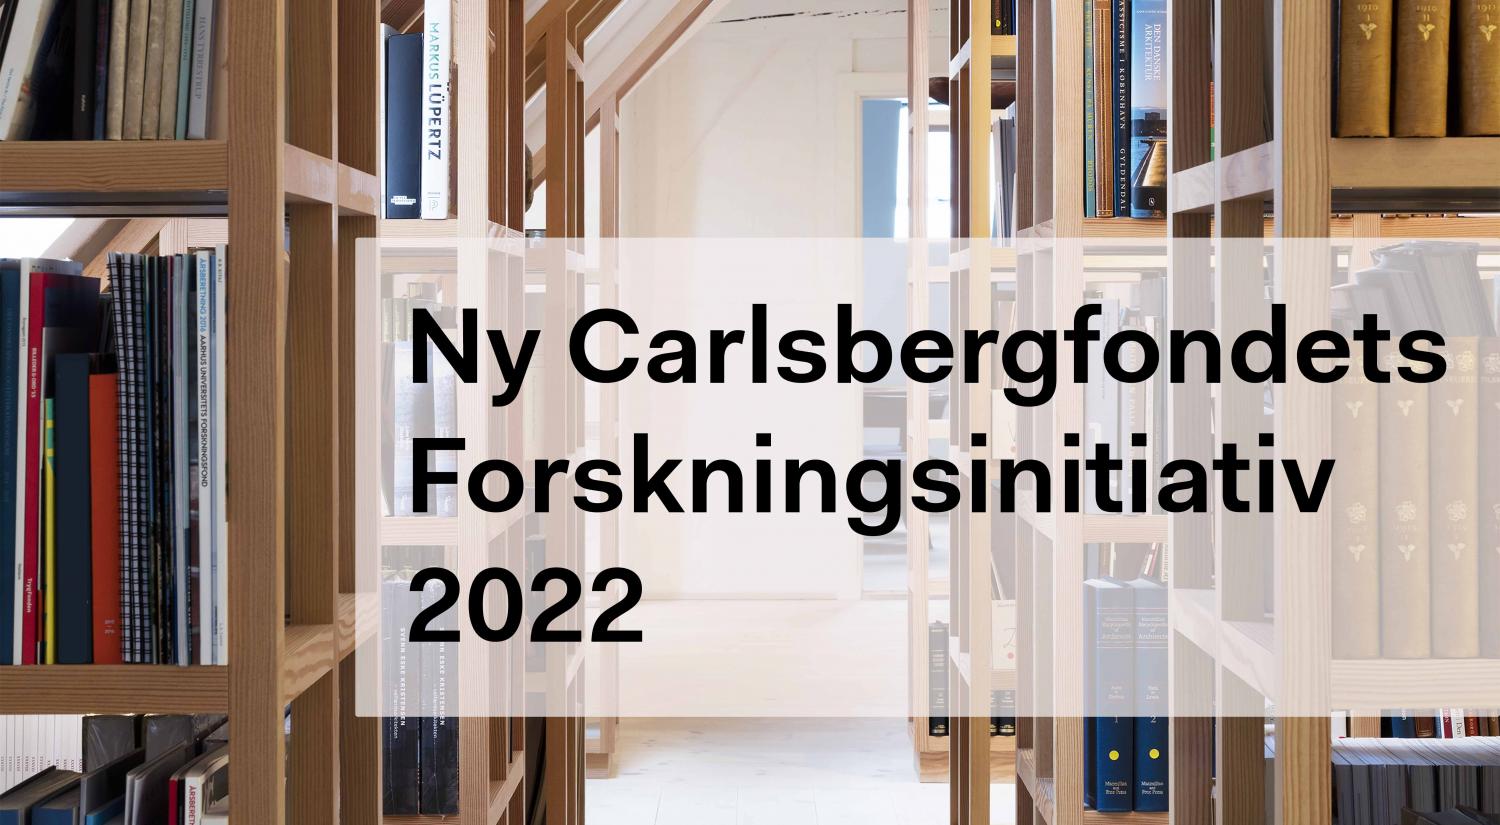 Ny Carlsbergfondets Forskningsinitiativ 2022